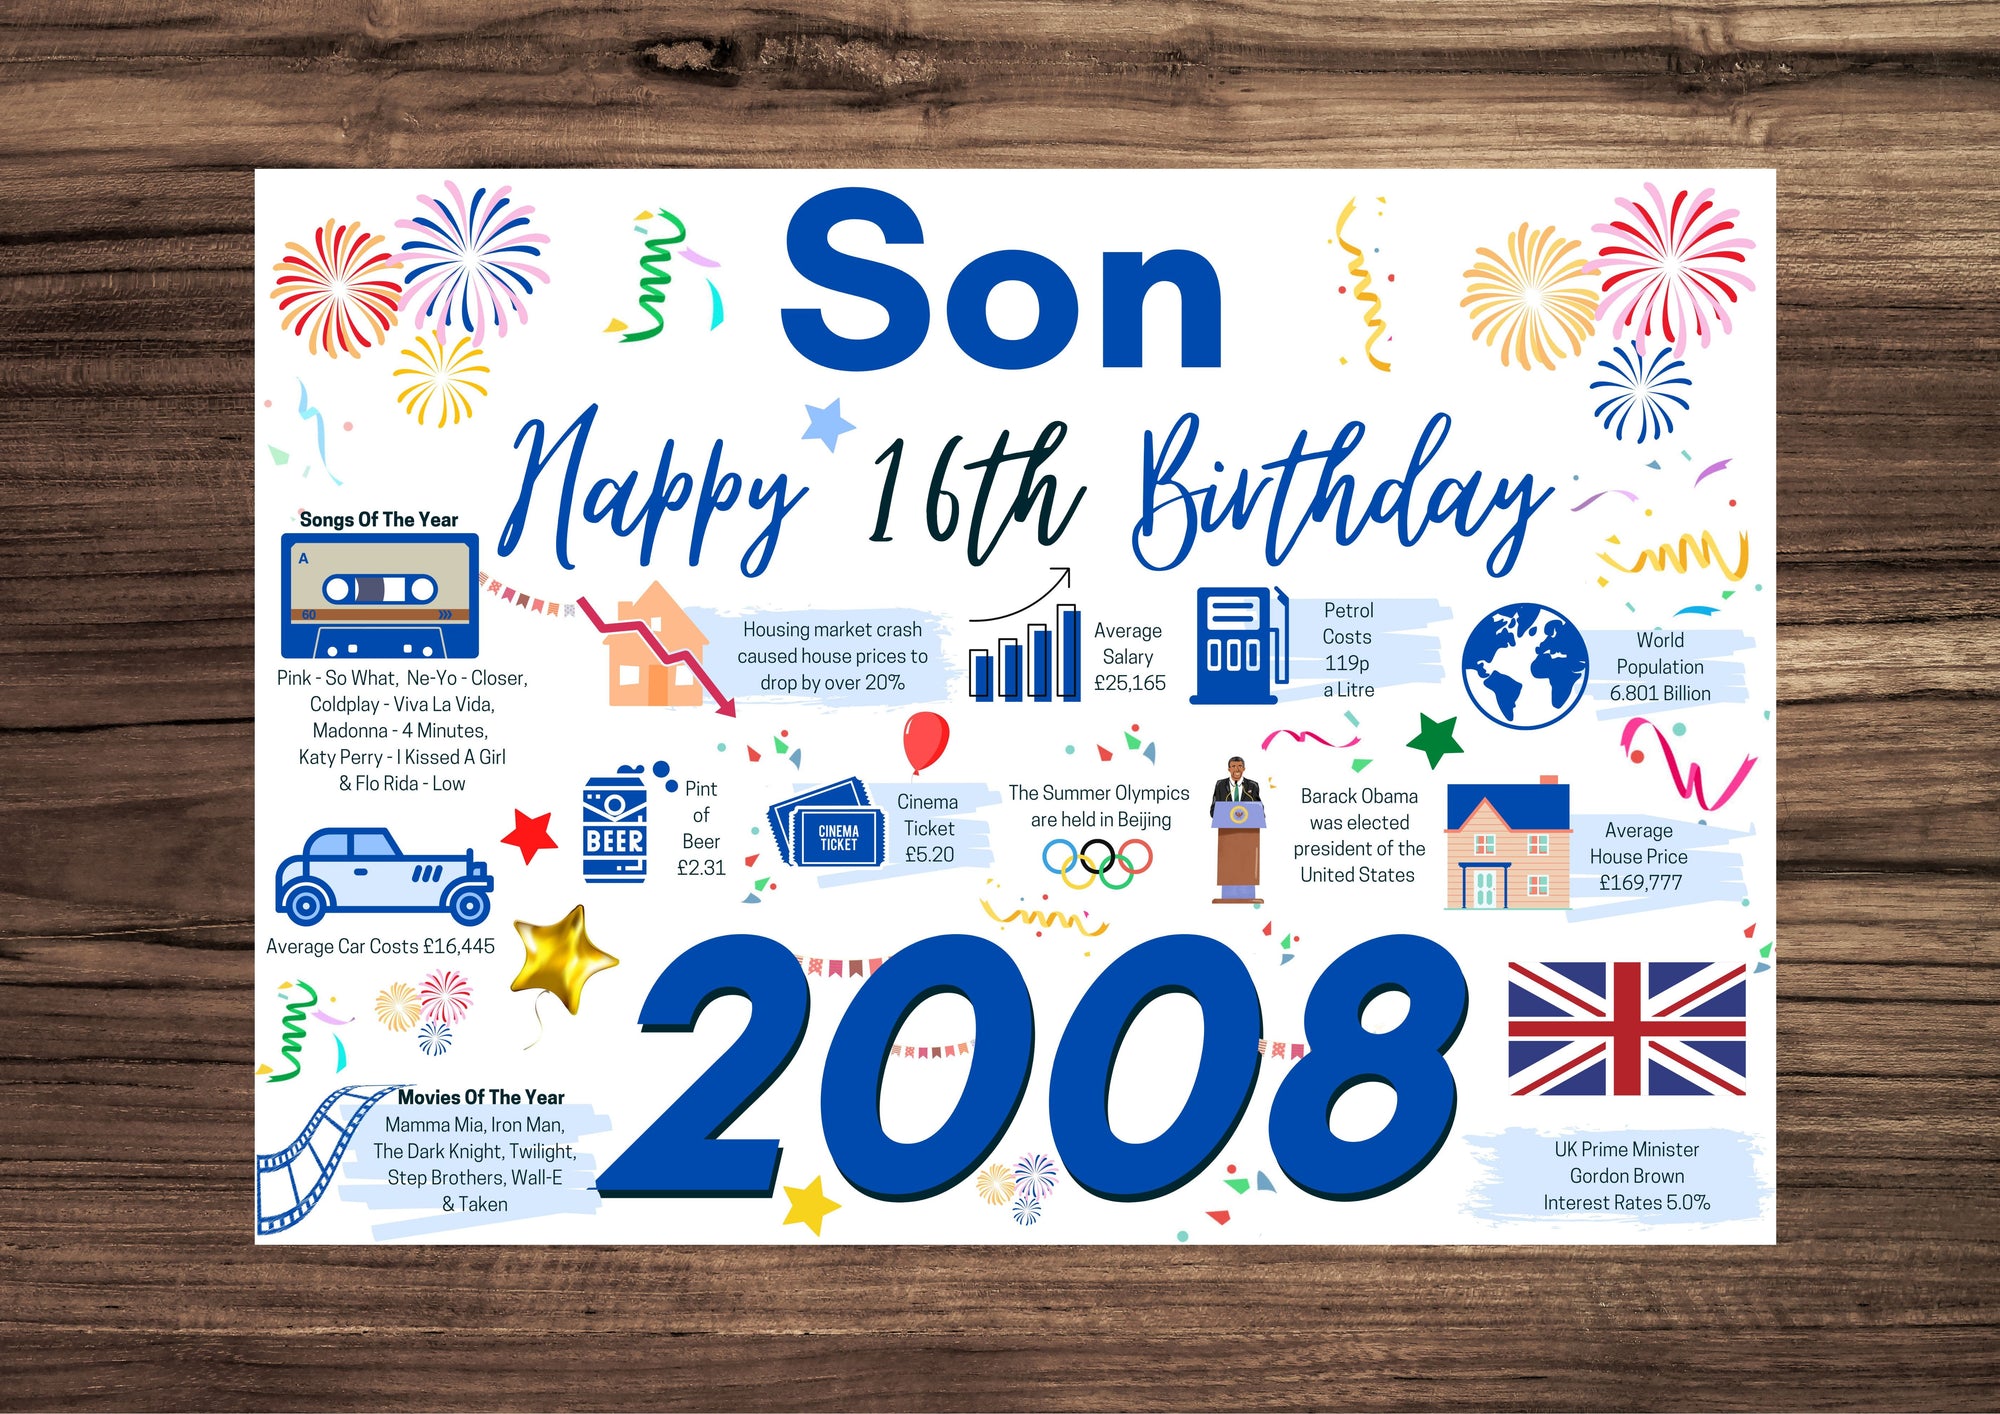 16th Birthday Card For Son, Born In 2008 Facts Milestone